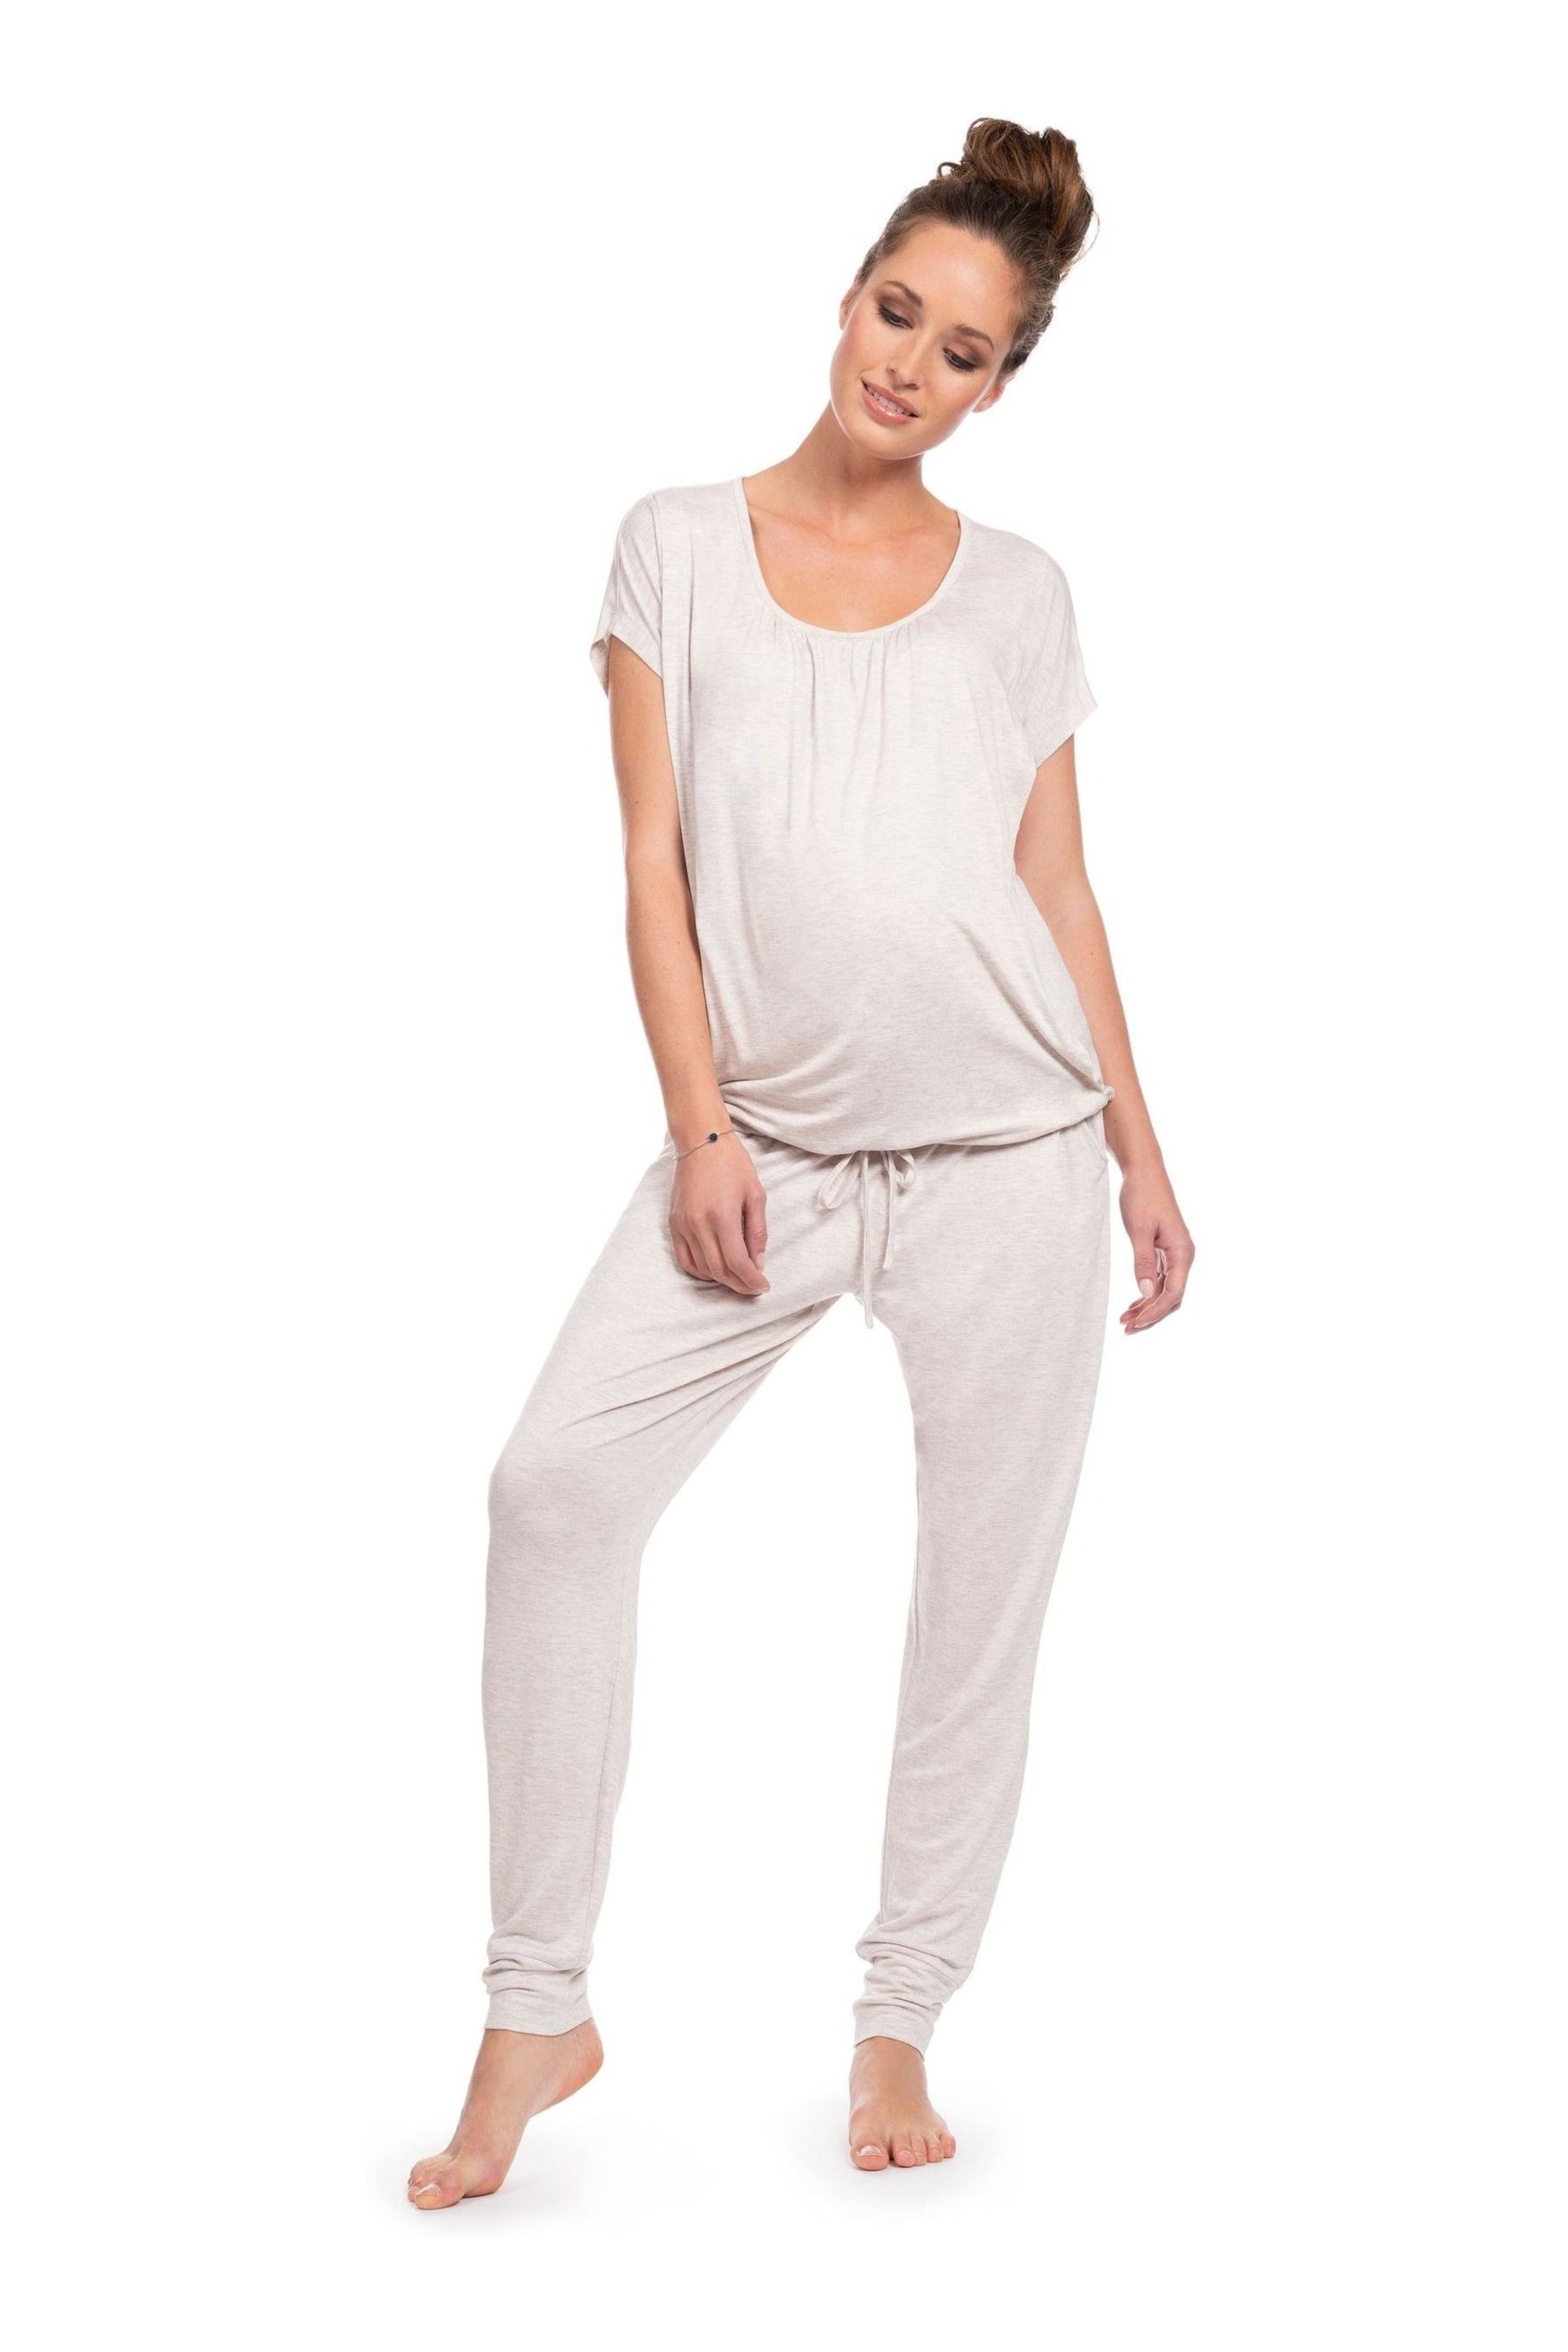 Seraphine Maternity & Nursing Ultra-Soft White Loungewear Set - Image 1 of 3